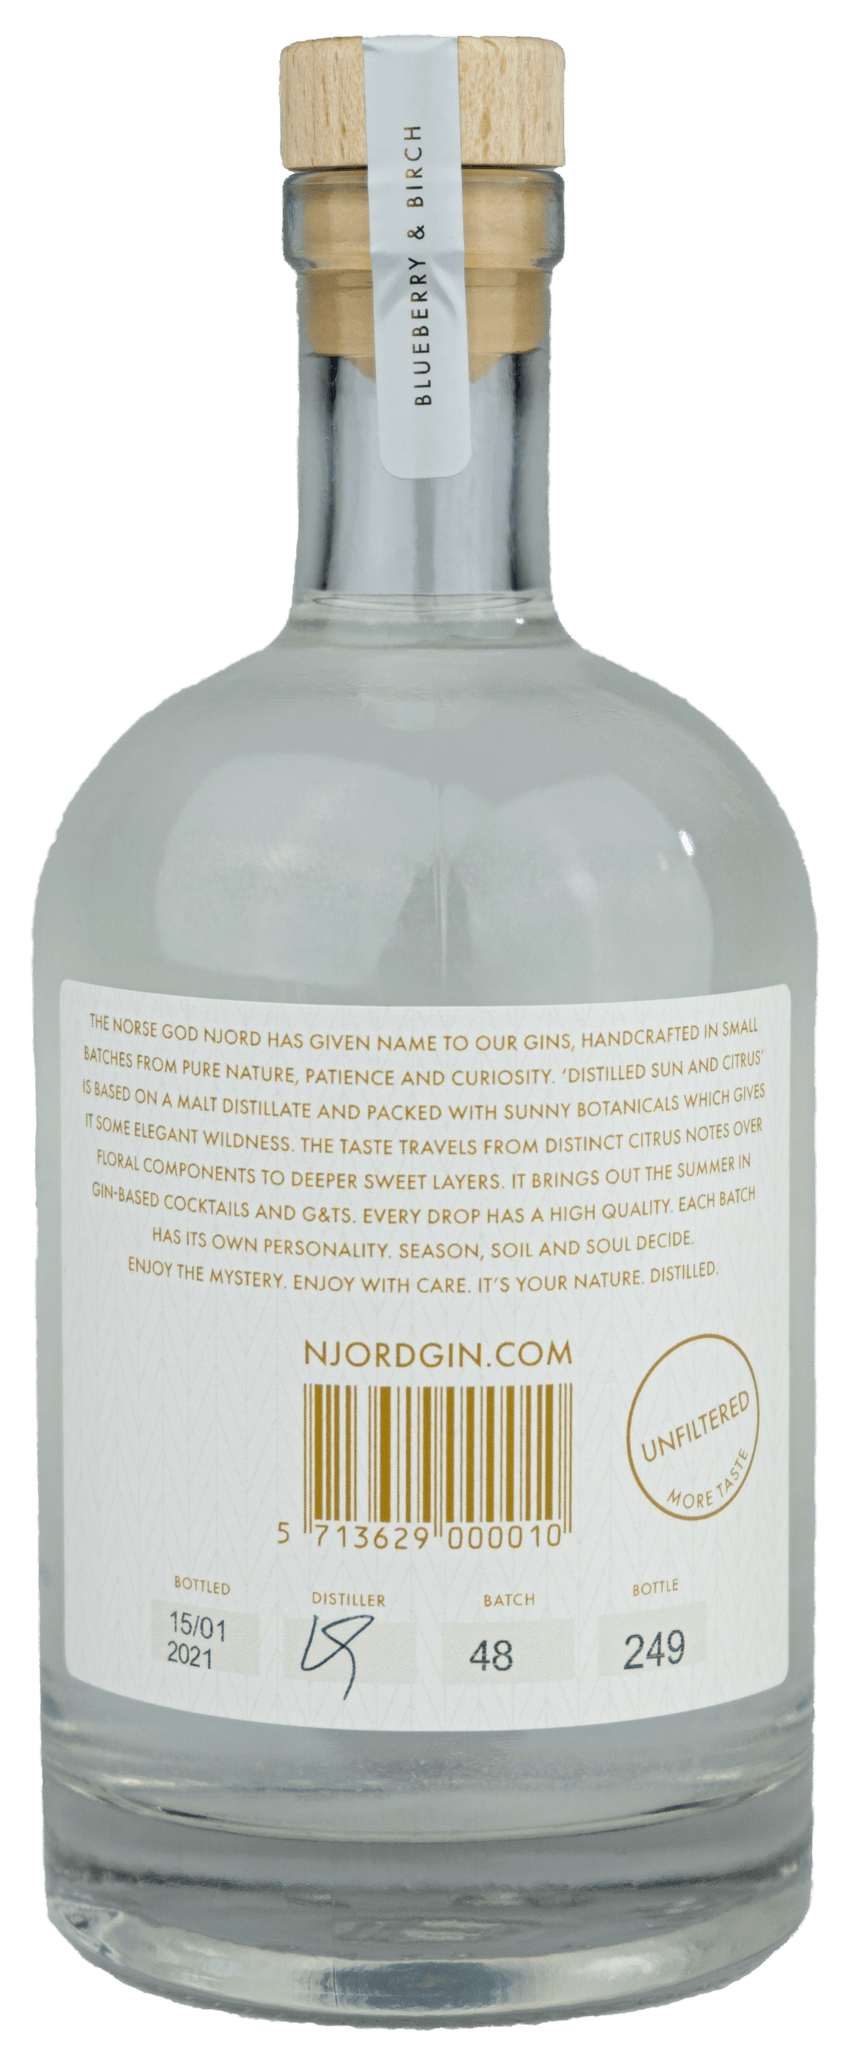 Distilled Sun And Citrus - Birch Sap Edition gin bottle-back